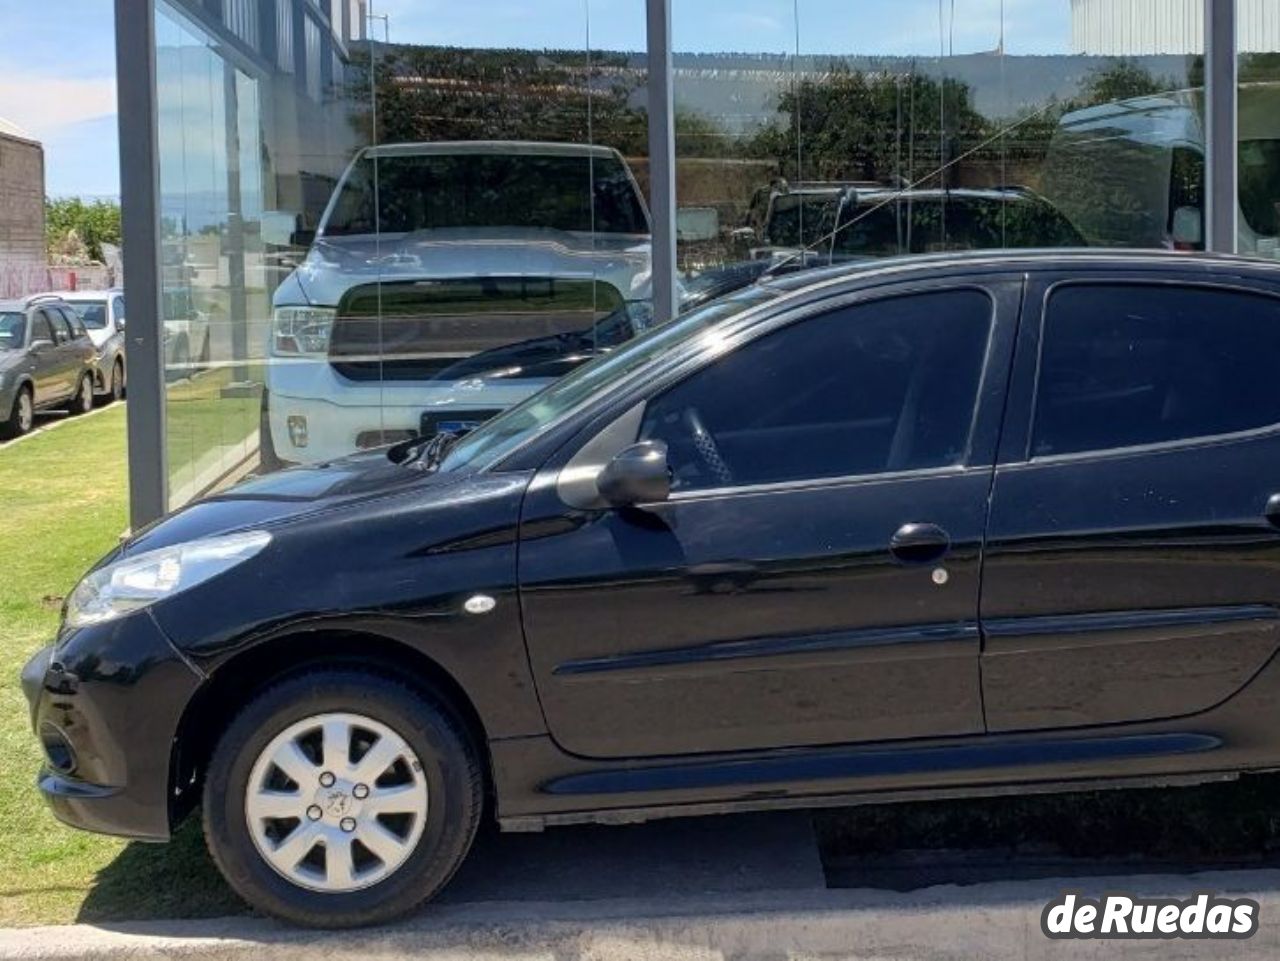 Peugeot 207 Usado en San Juan, deRuedas